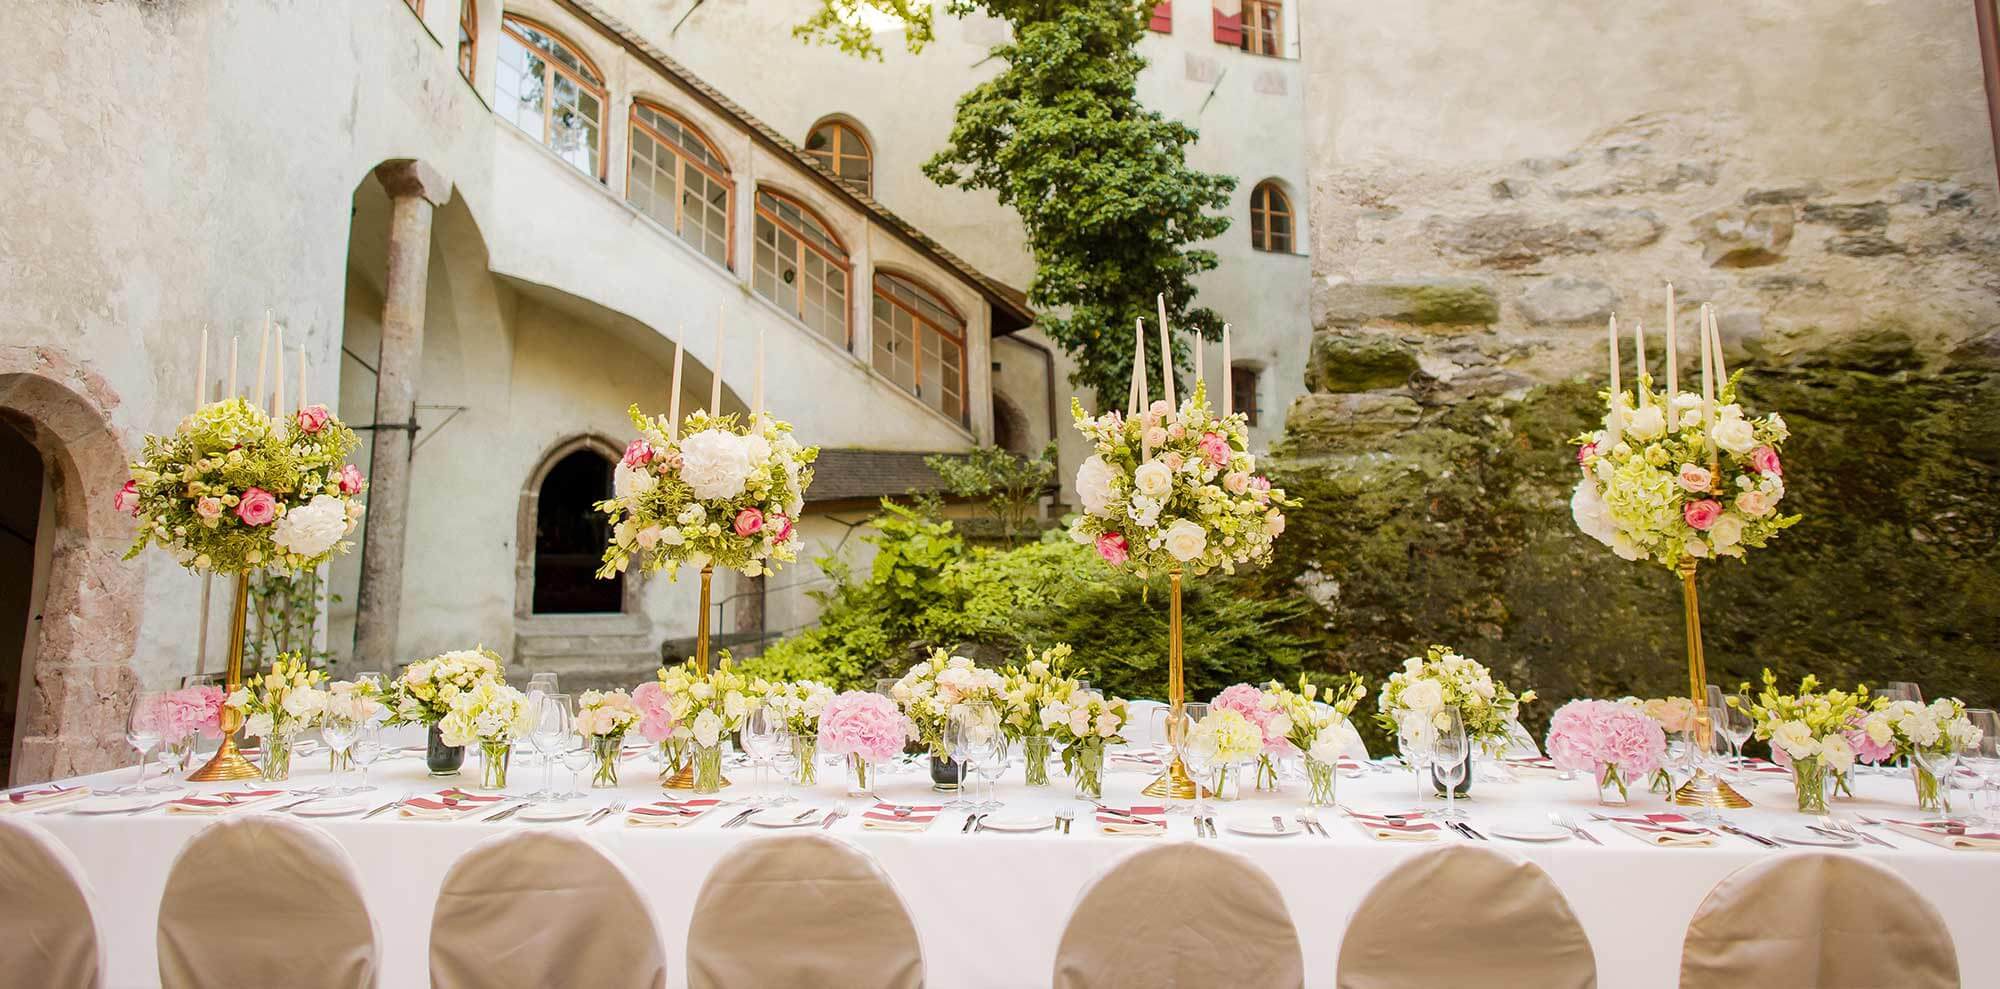 castle friedberg getting married in courtyard dinner table